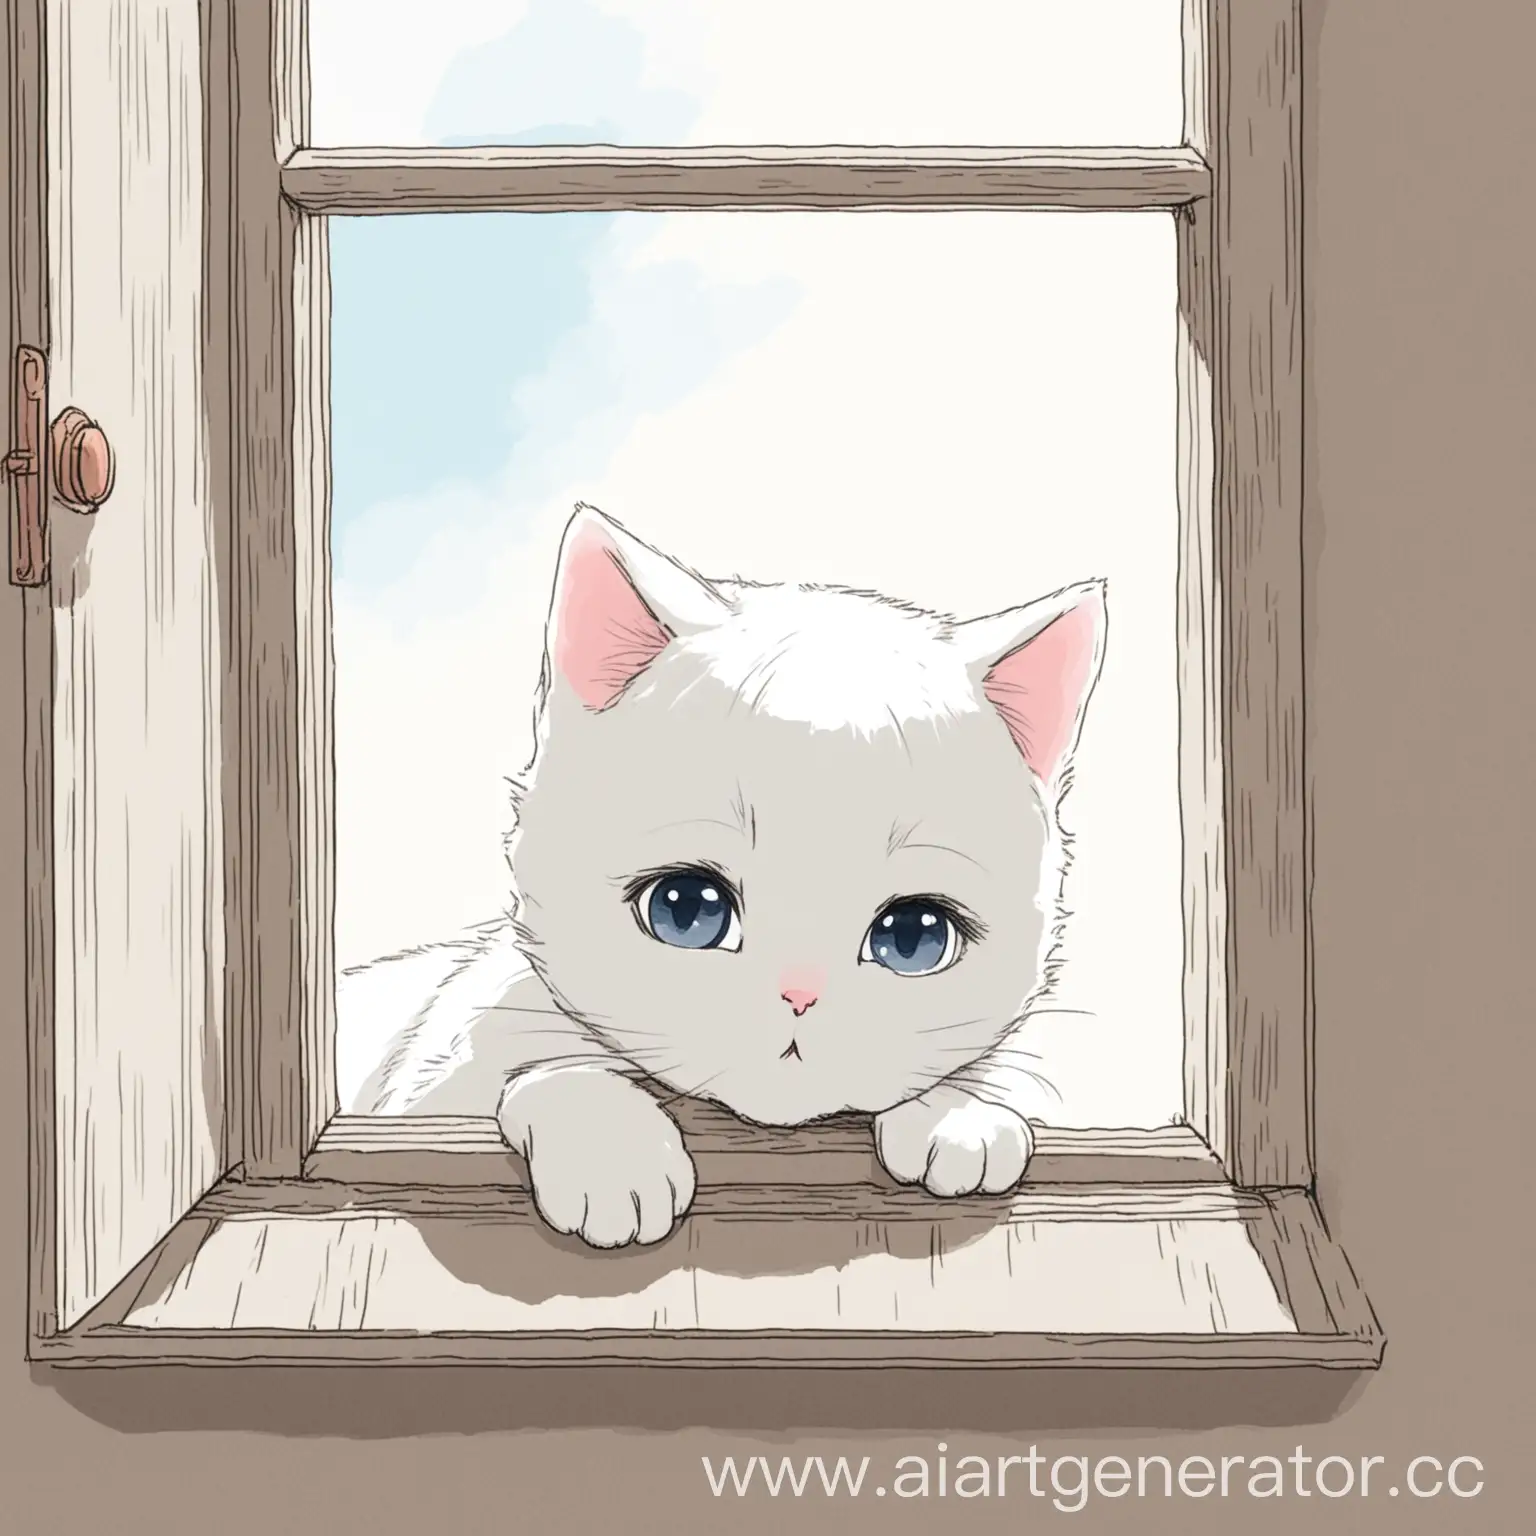 White-Kitty-Peeking-Out-of-Window-Sending-a-Kiss